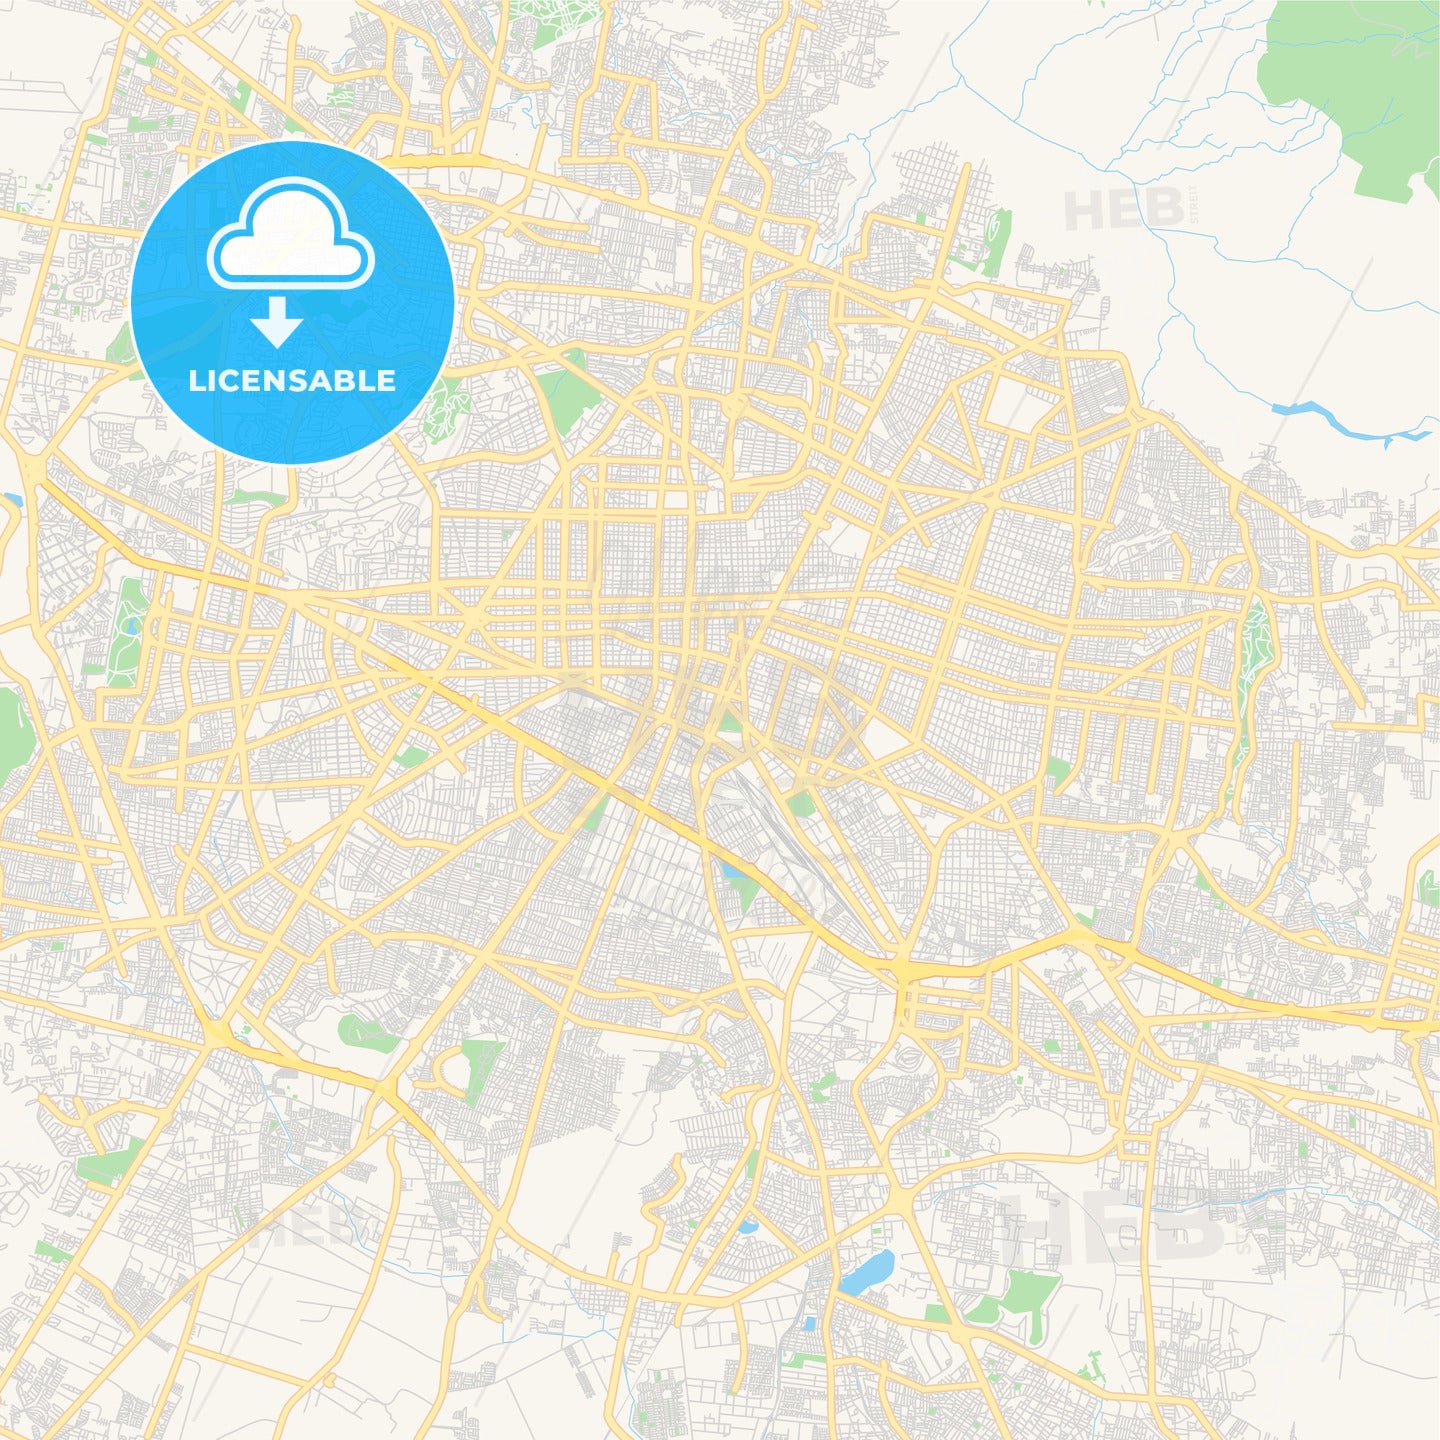 Empty vector map of Guadalajara, Jalisco, Mexico